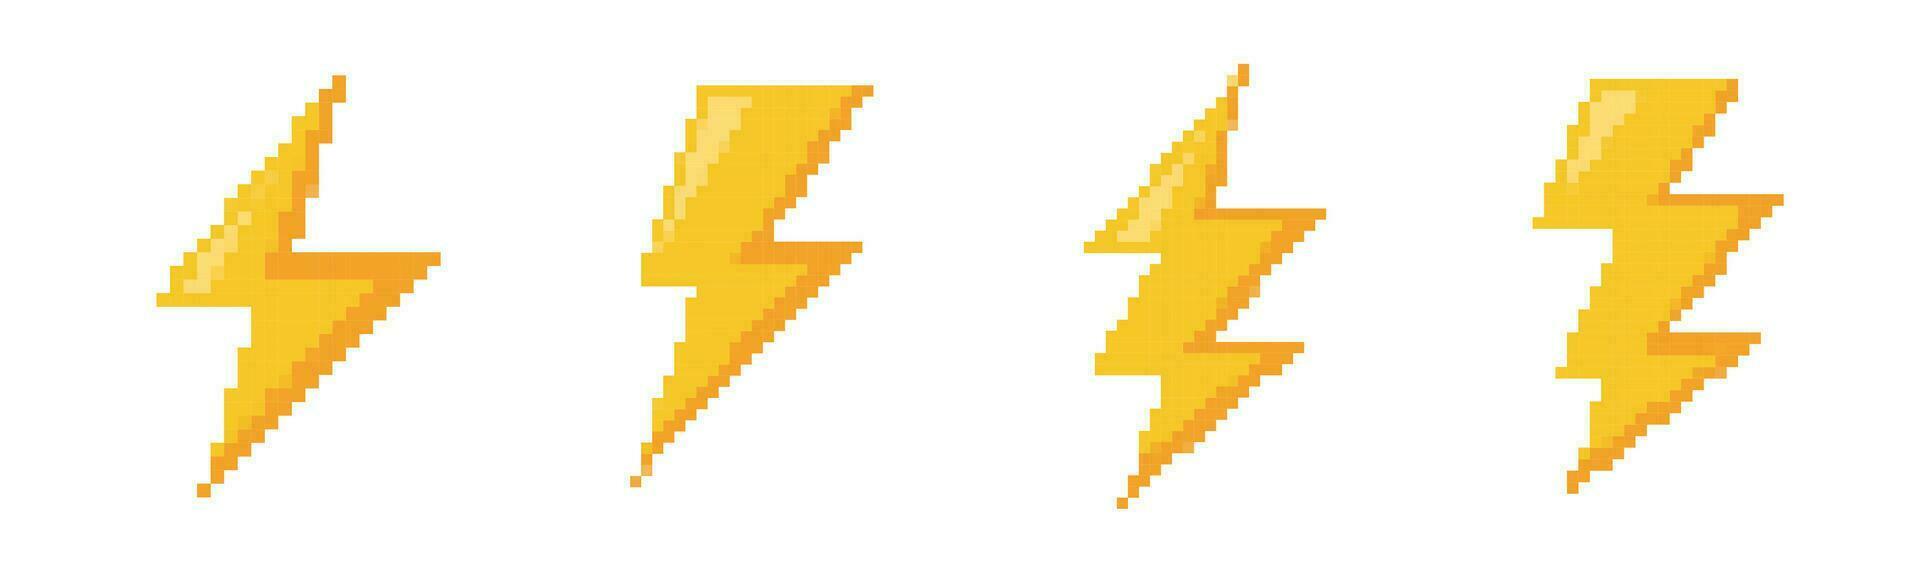 Pixel 8 bit  lightning bolt  retro icon. 8 bit old game zap thunder vector